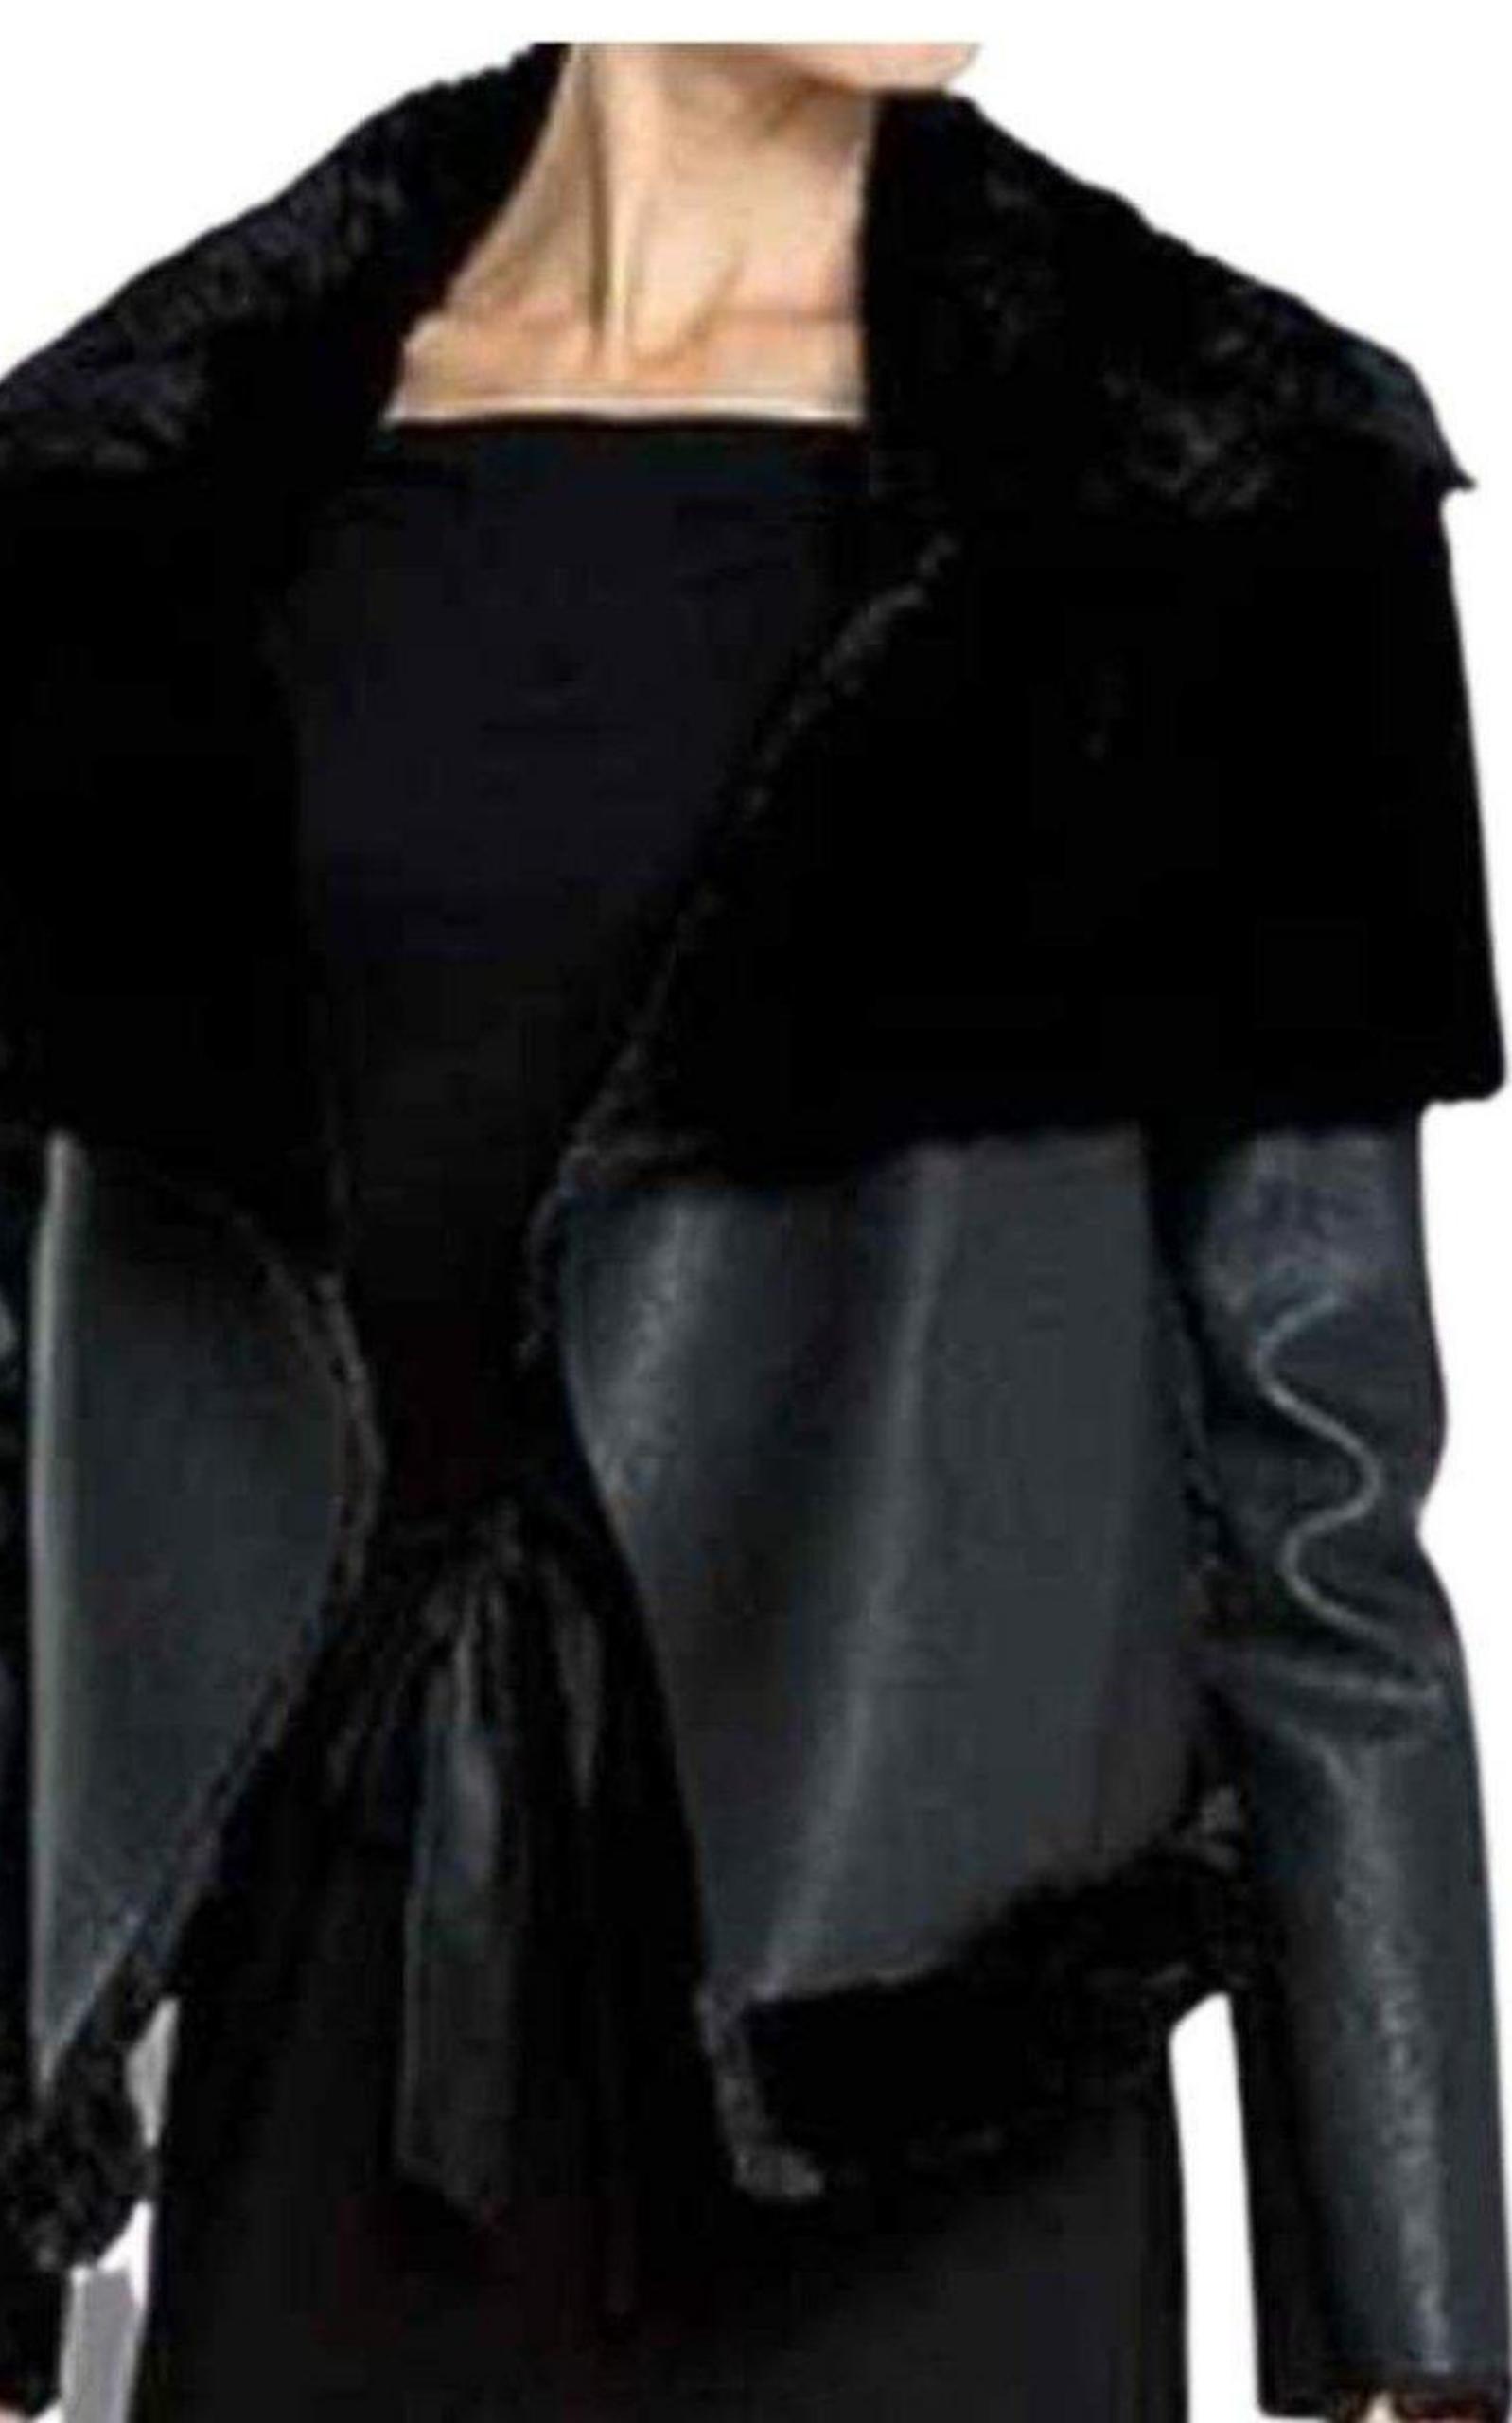  BCBGMAXAZRIABlack Faux Leather Jacket - Runway Catalog